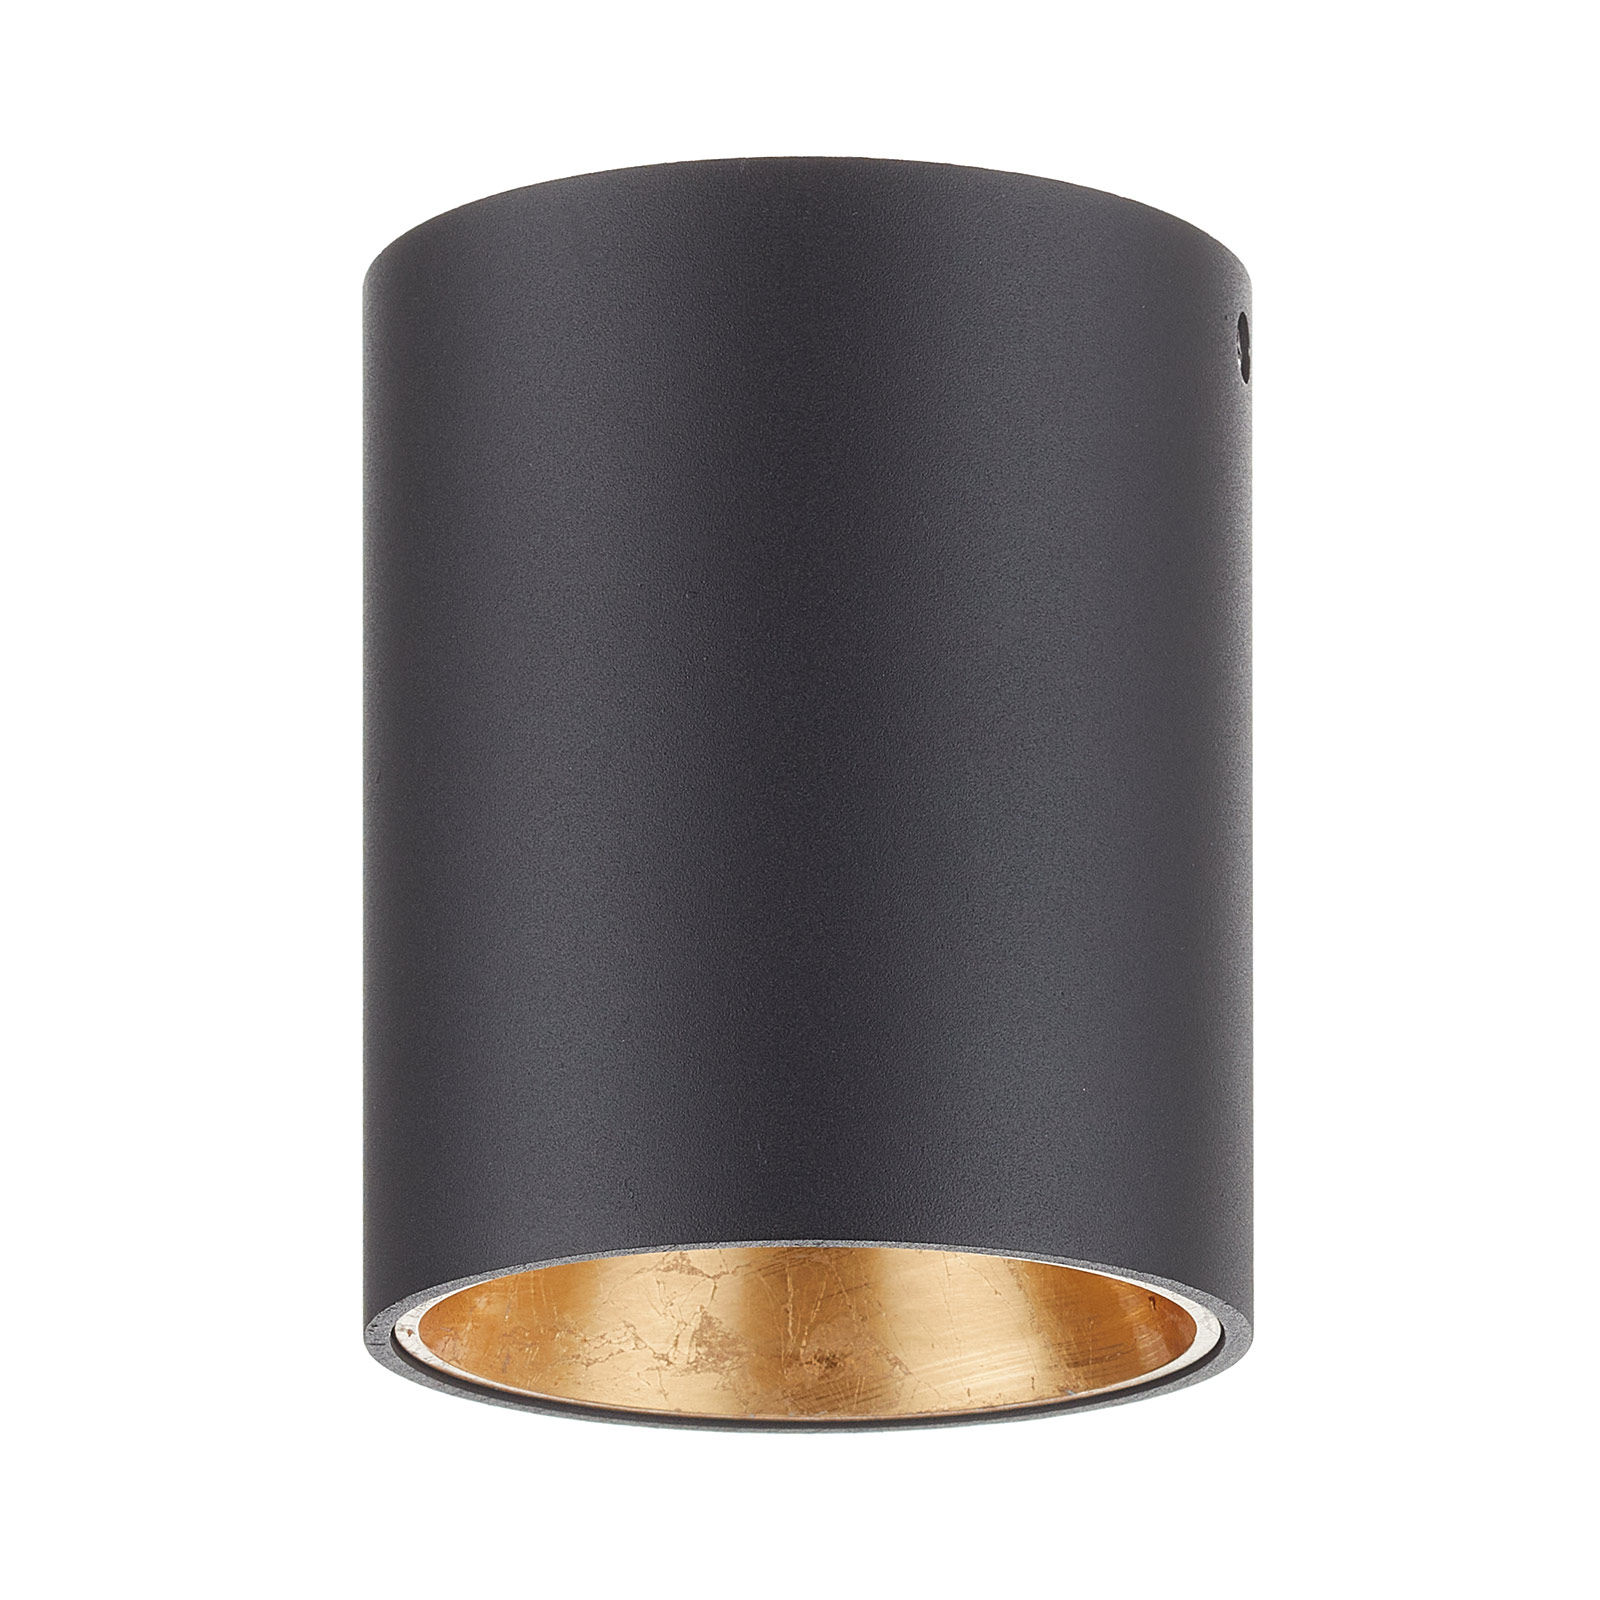 LED plafondlamp Polasso rond, zwart-goud